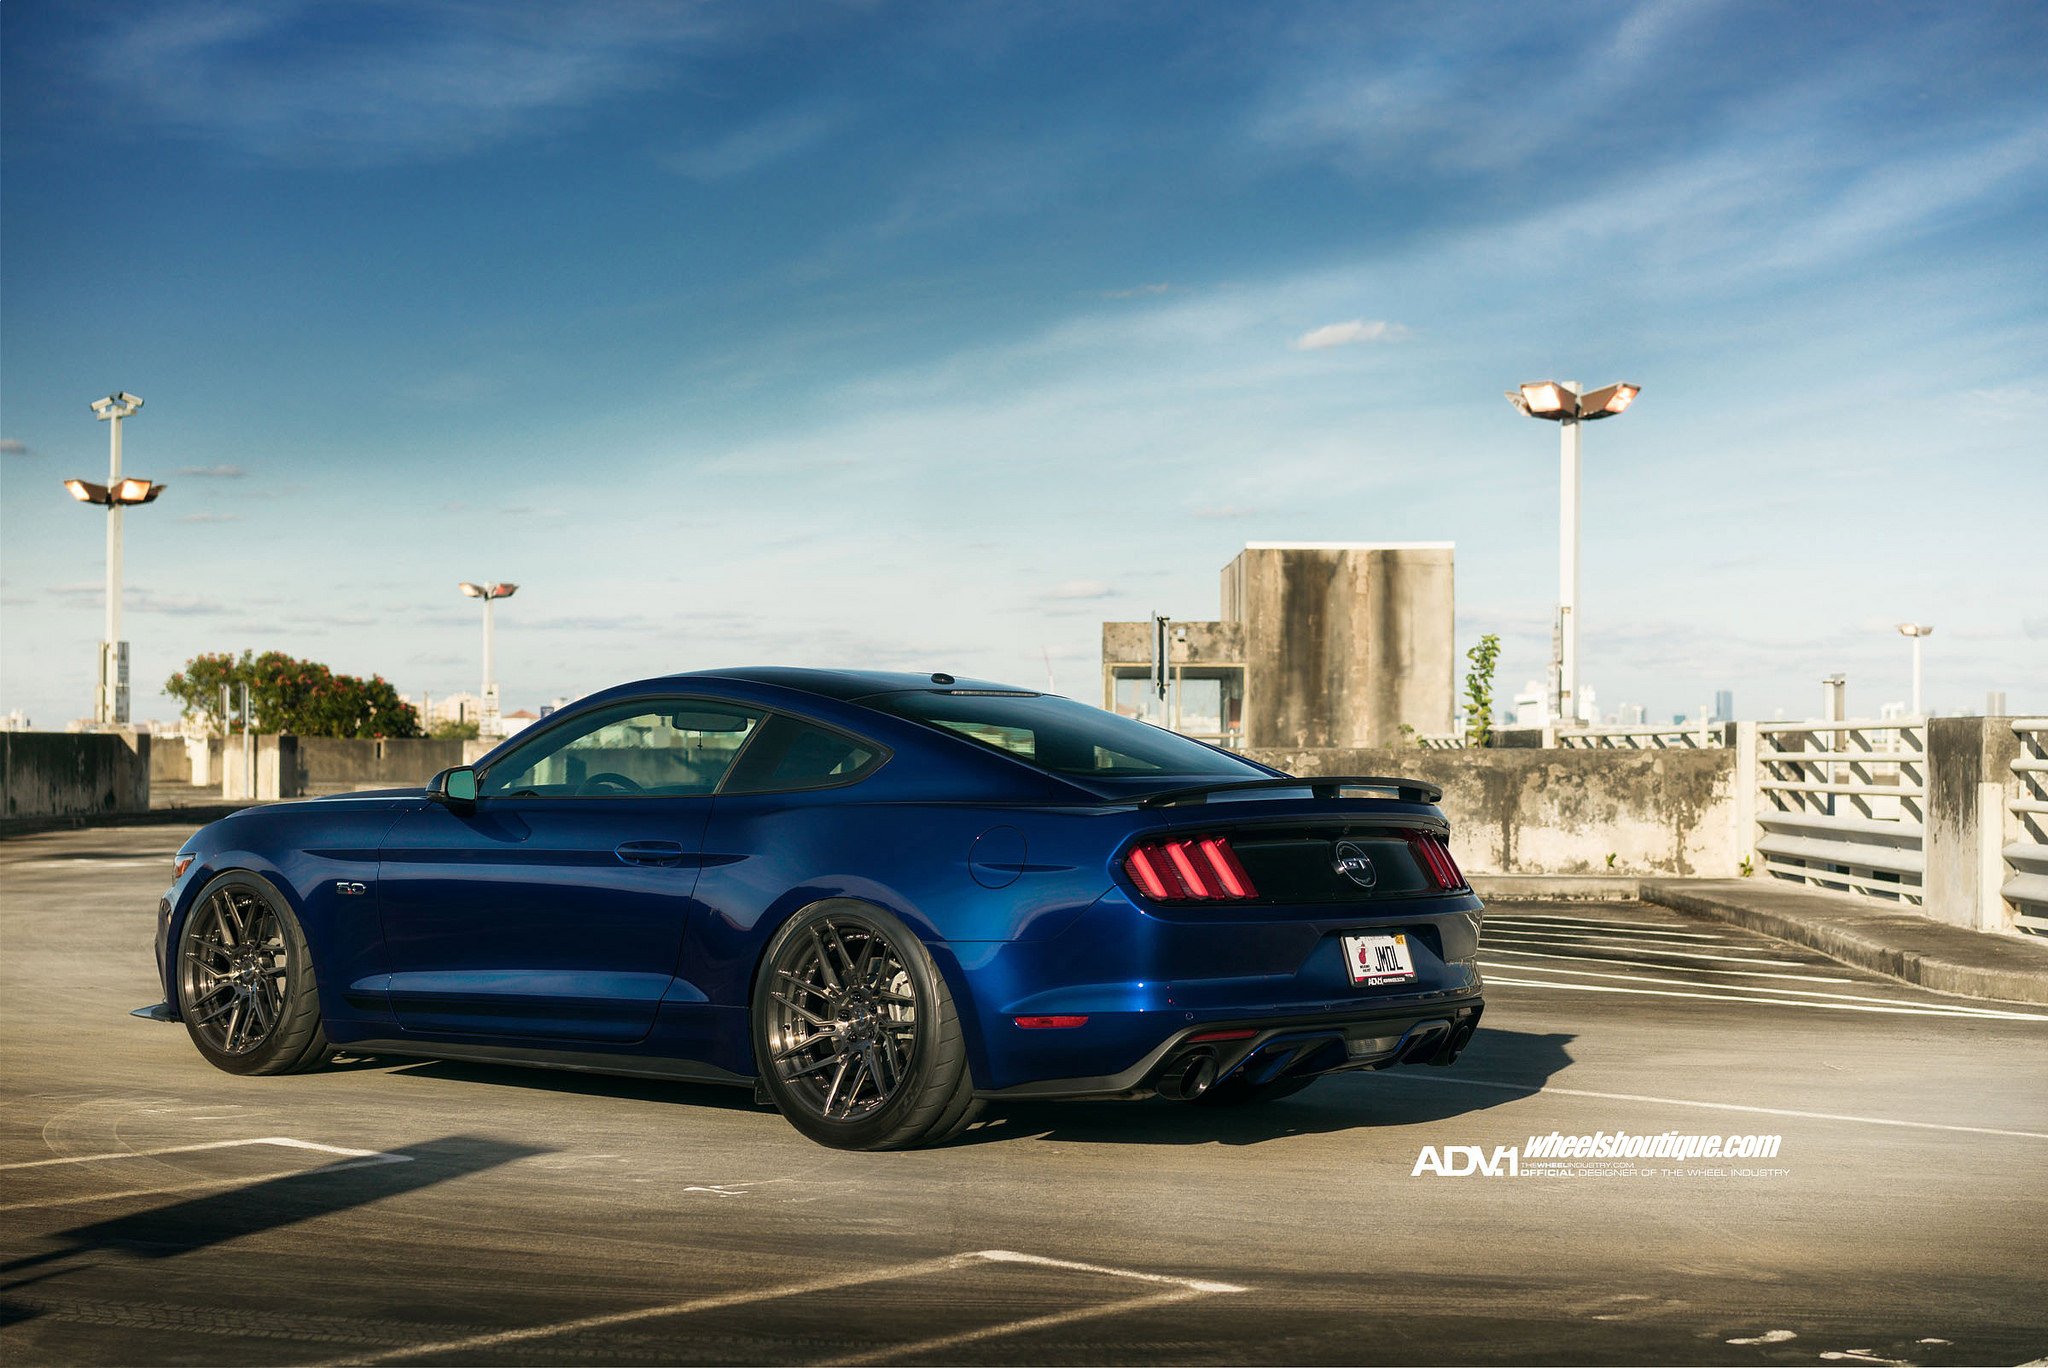 ford, Mustang, Gt, Cs, Blue, Cars, Adv1, Wheels Wallpaper